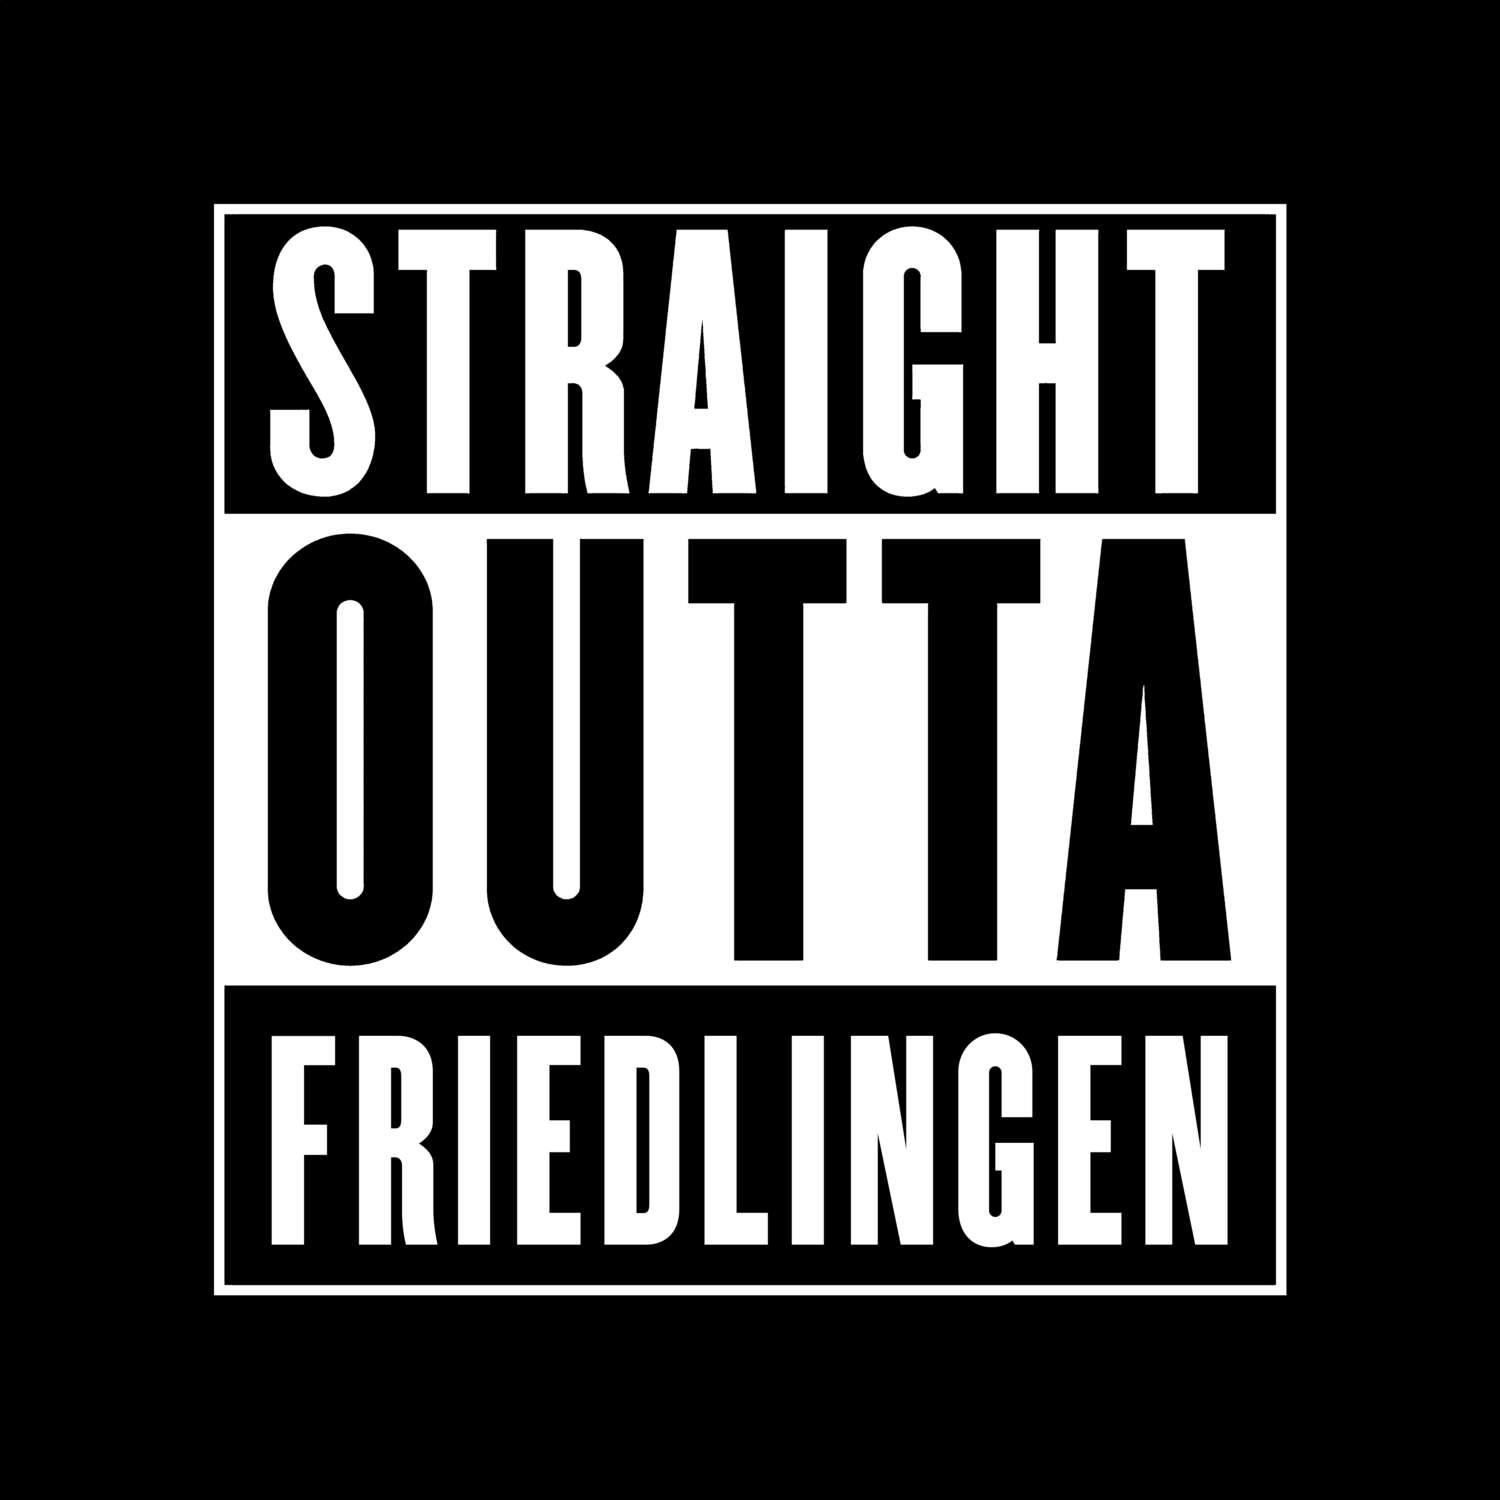 Friedlingen T-Shirt »Straight Outta«